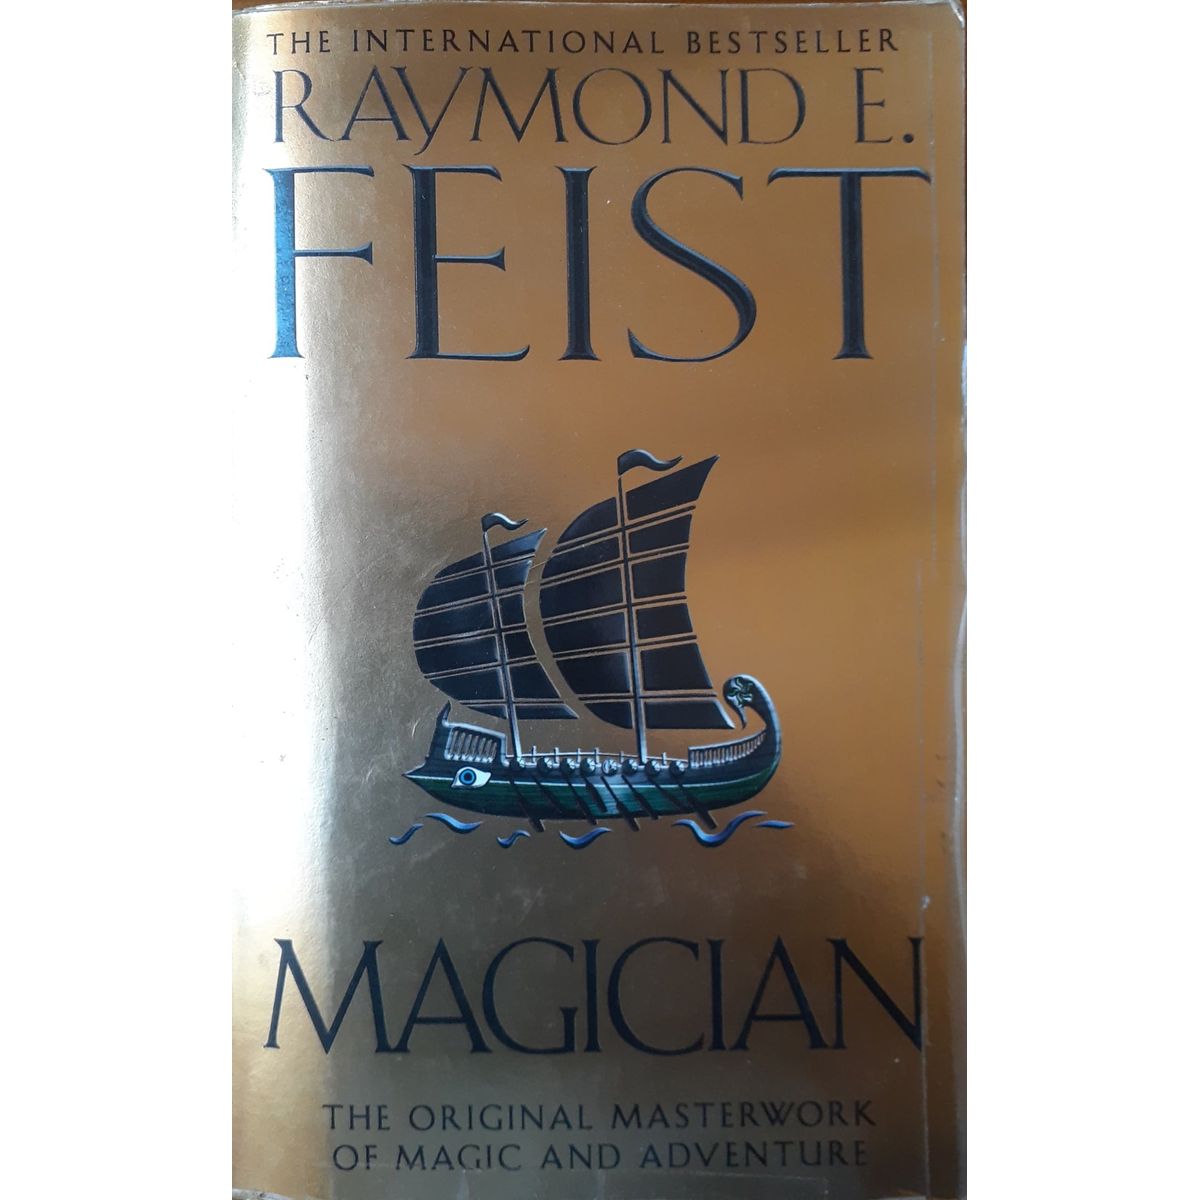 ISBN: 9780586217832 / 0586217835 - Magician by Raymond E. Feist [2009]